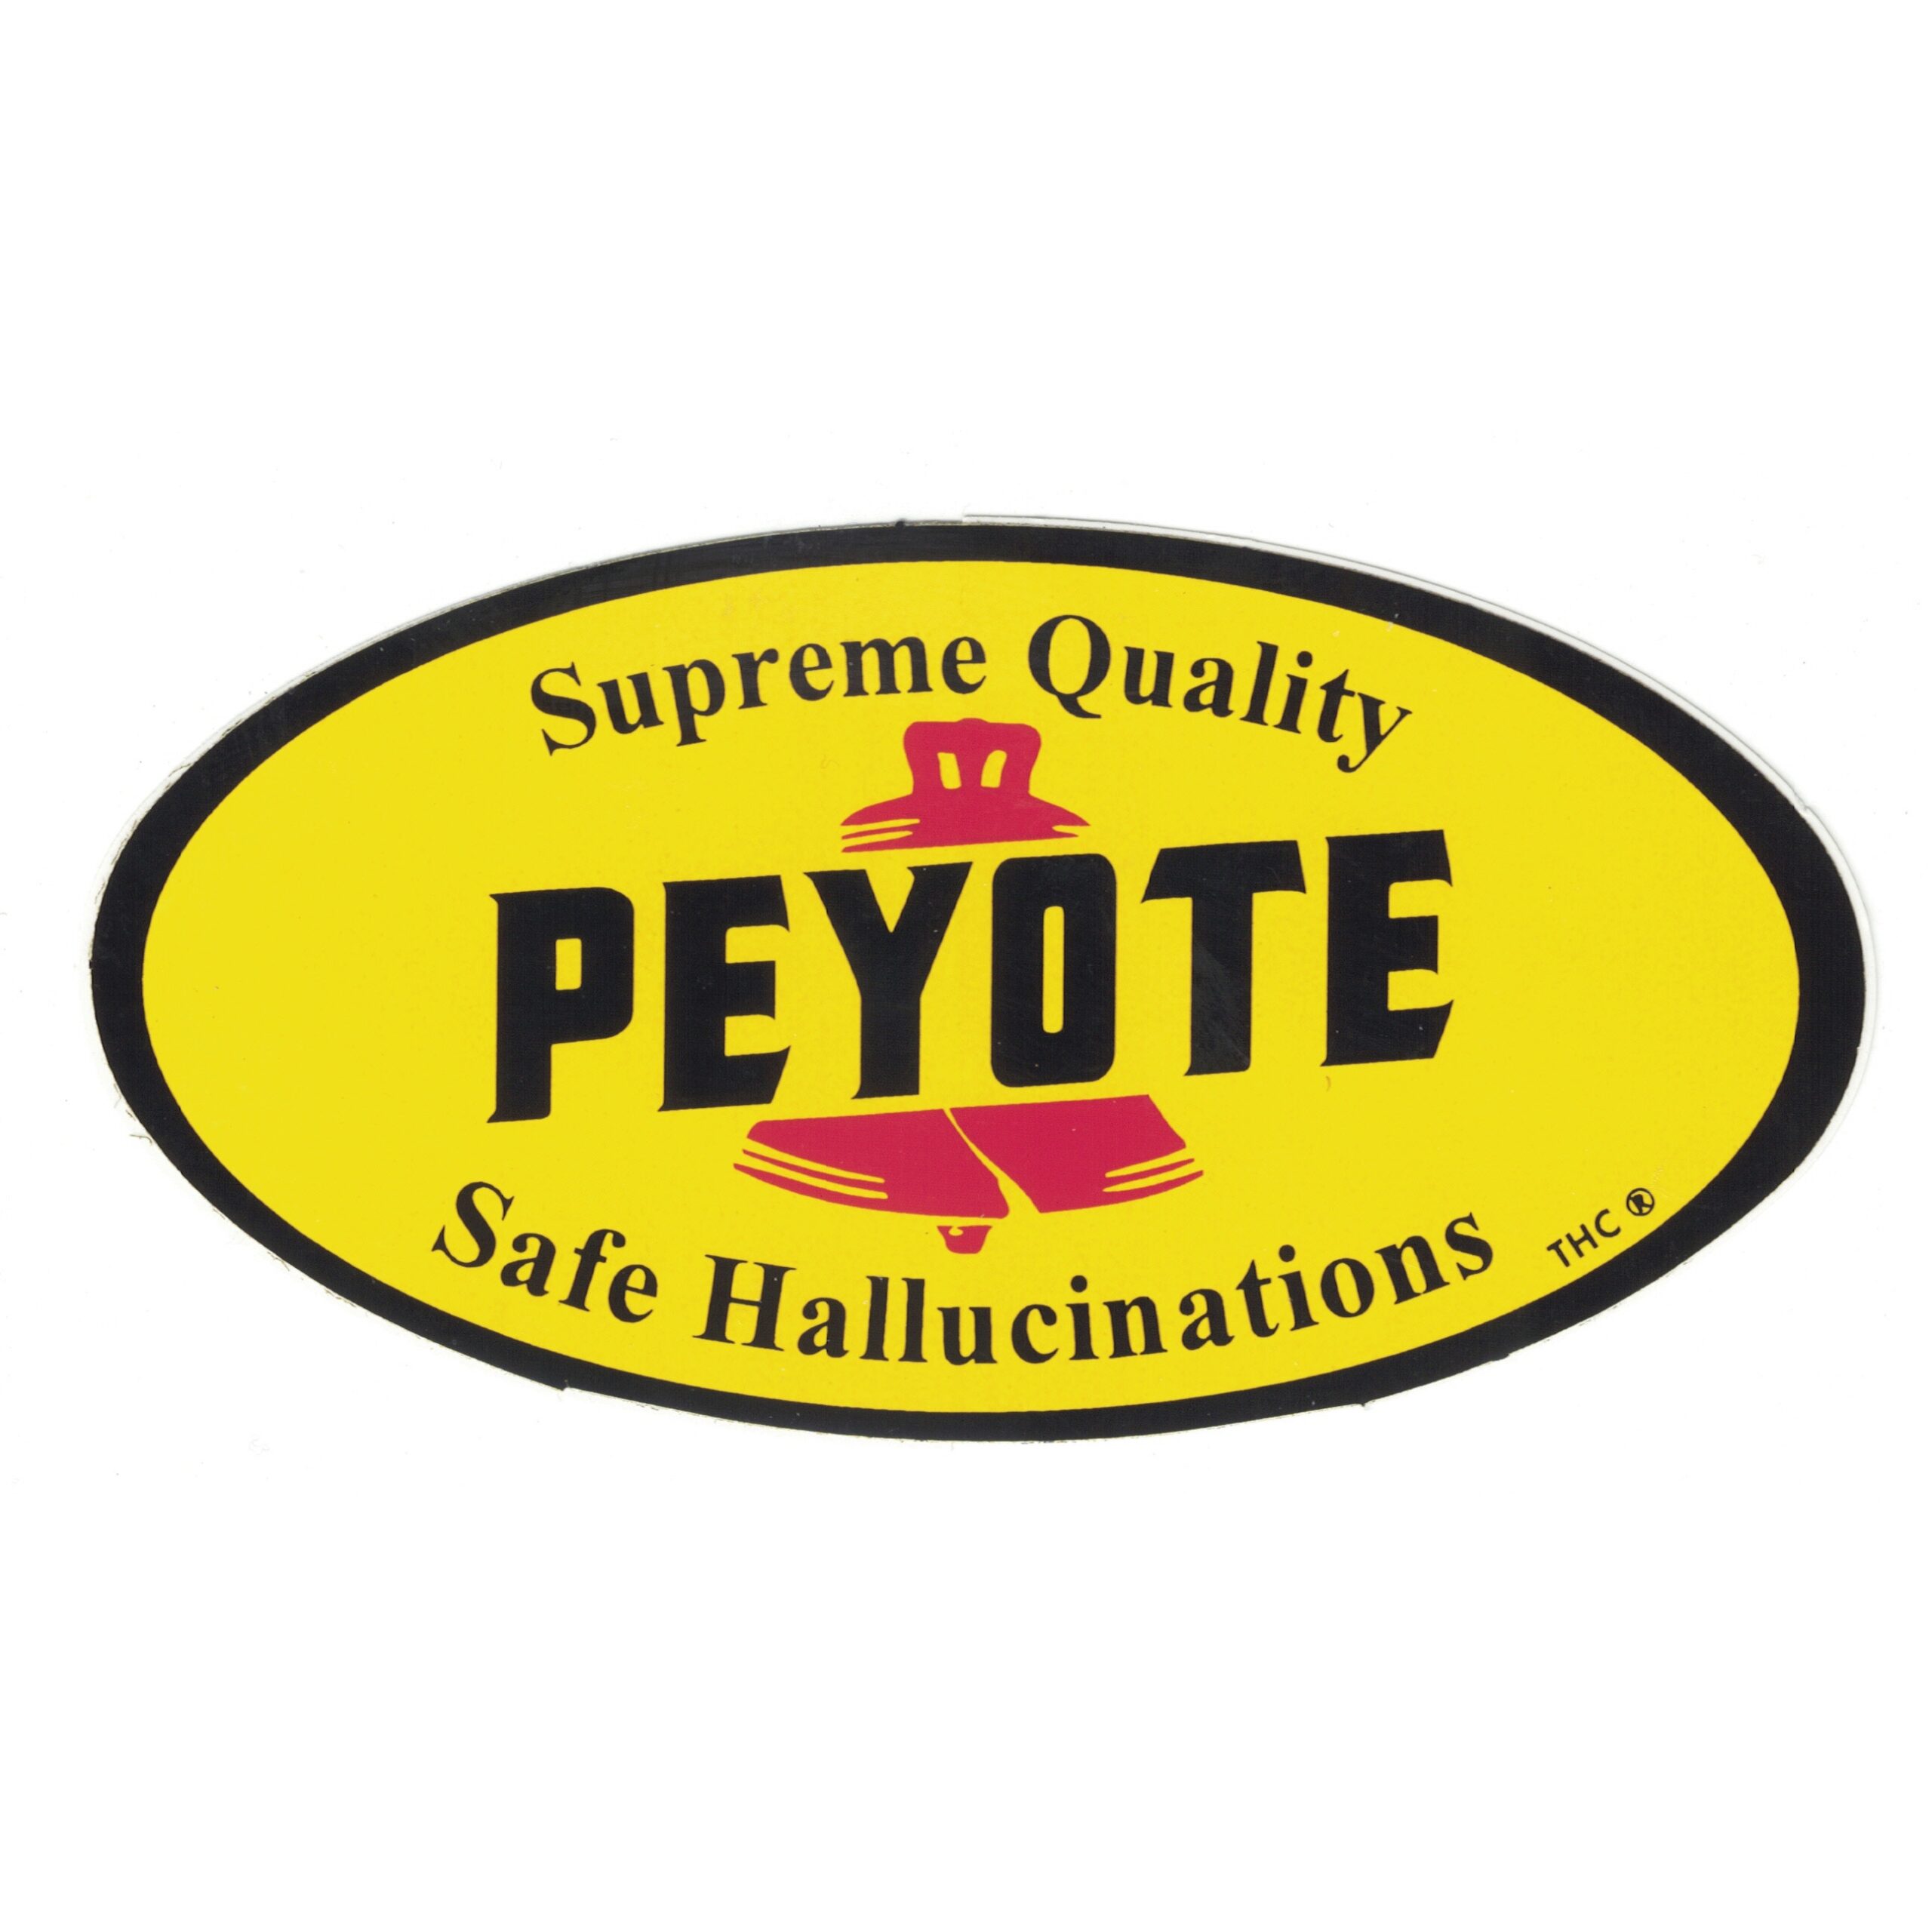 THC Pennzoil Peyote Safe Hallucinations